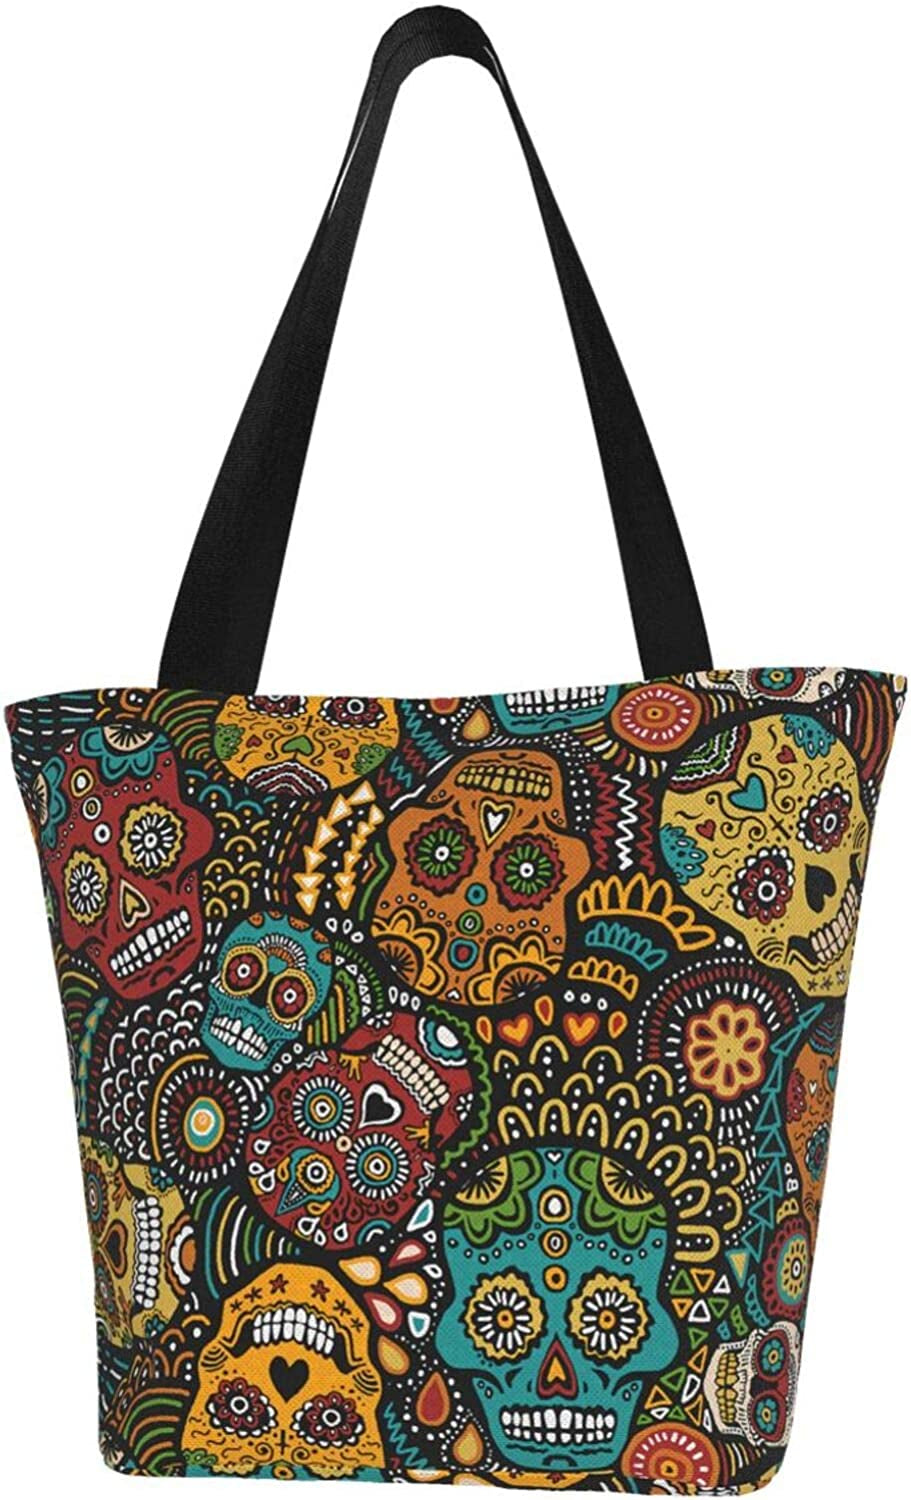 Antkondnm Reusable Tote Bag Women Large Casual Handbag Shoulder Bags for Shopping Groceries Travel Outdoors